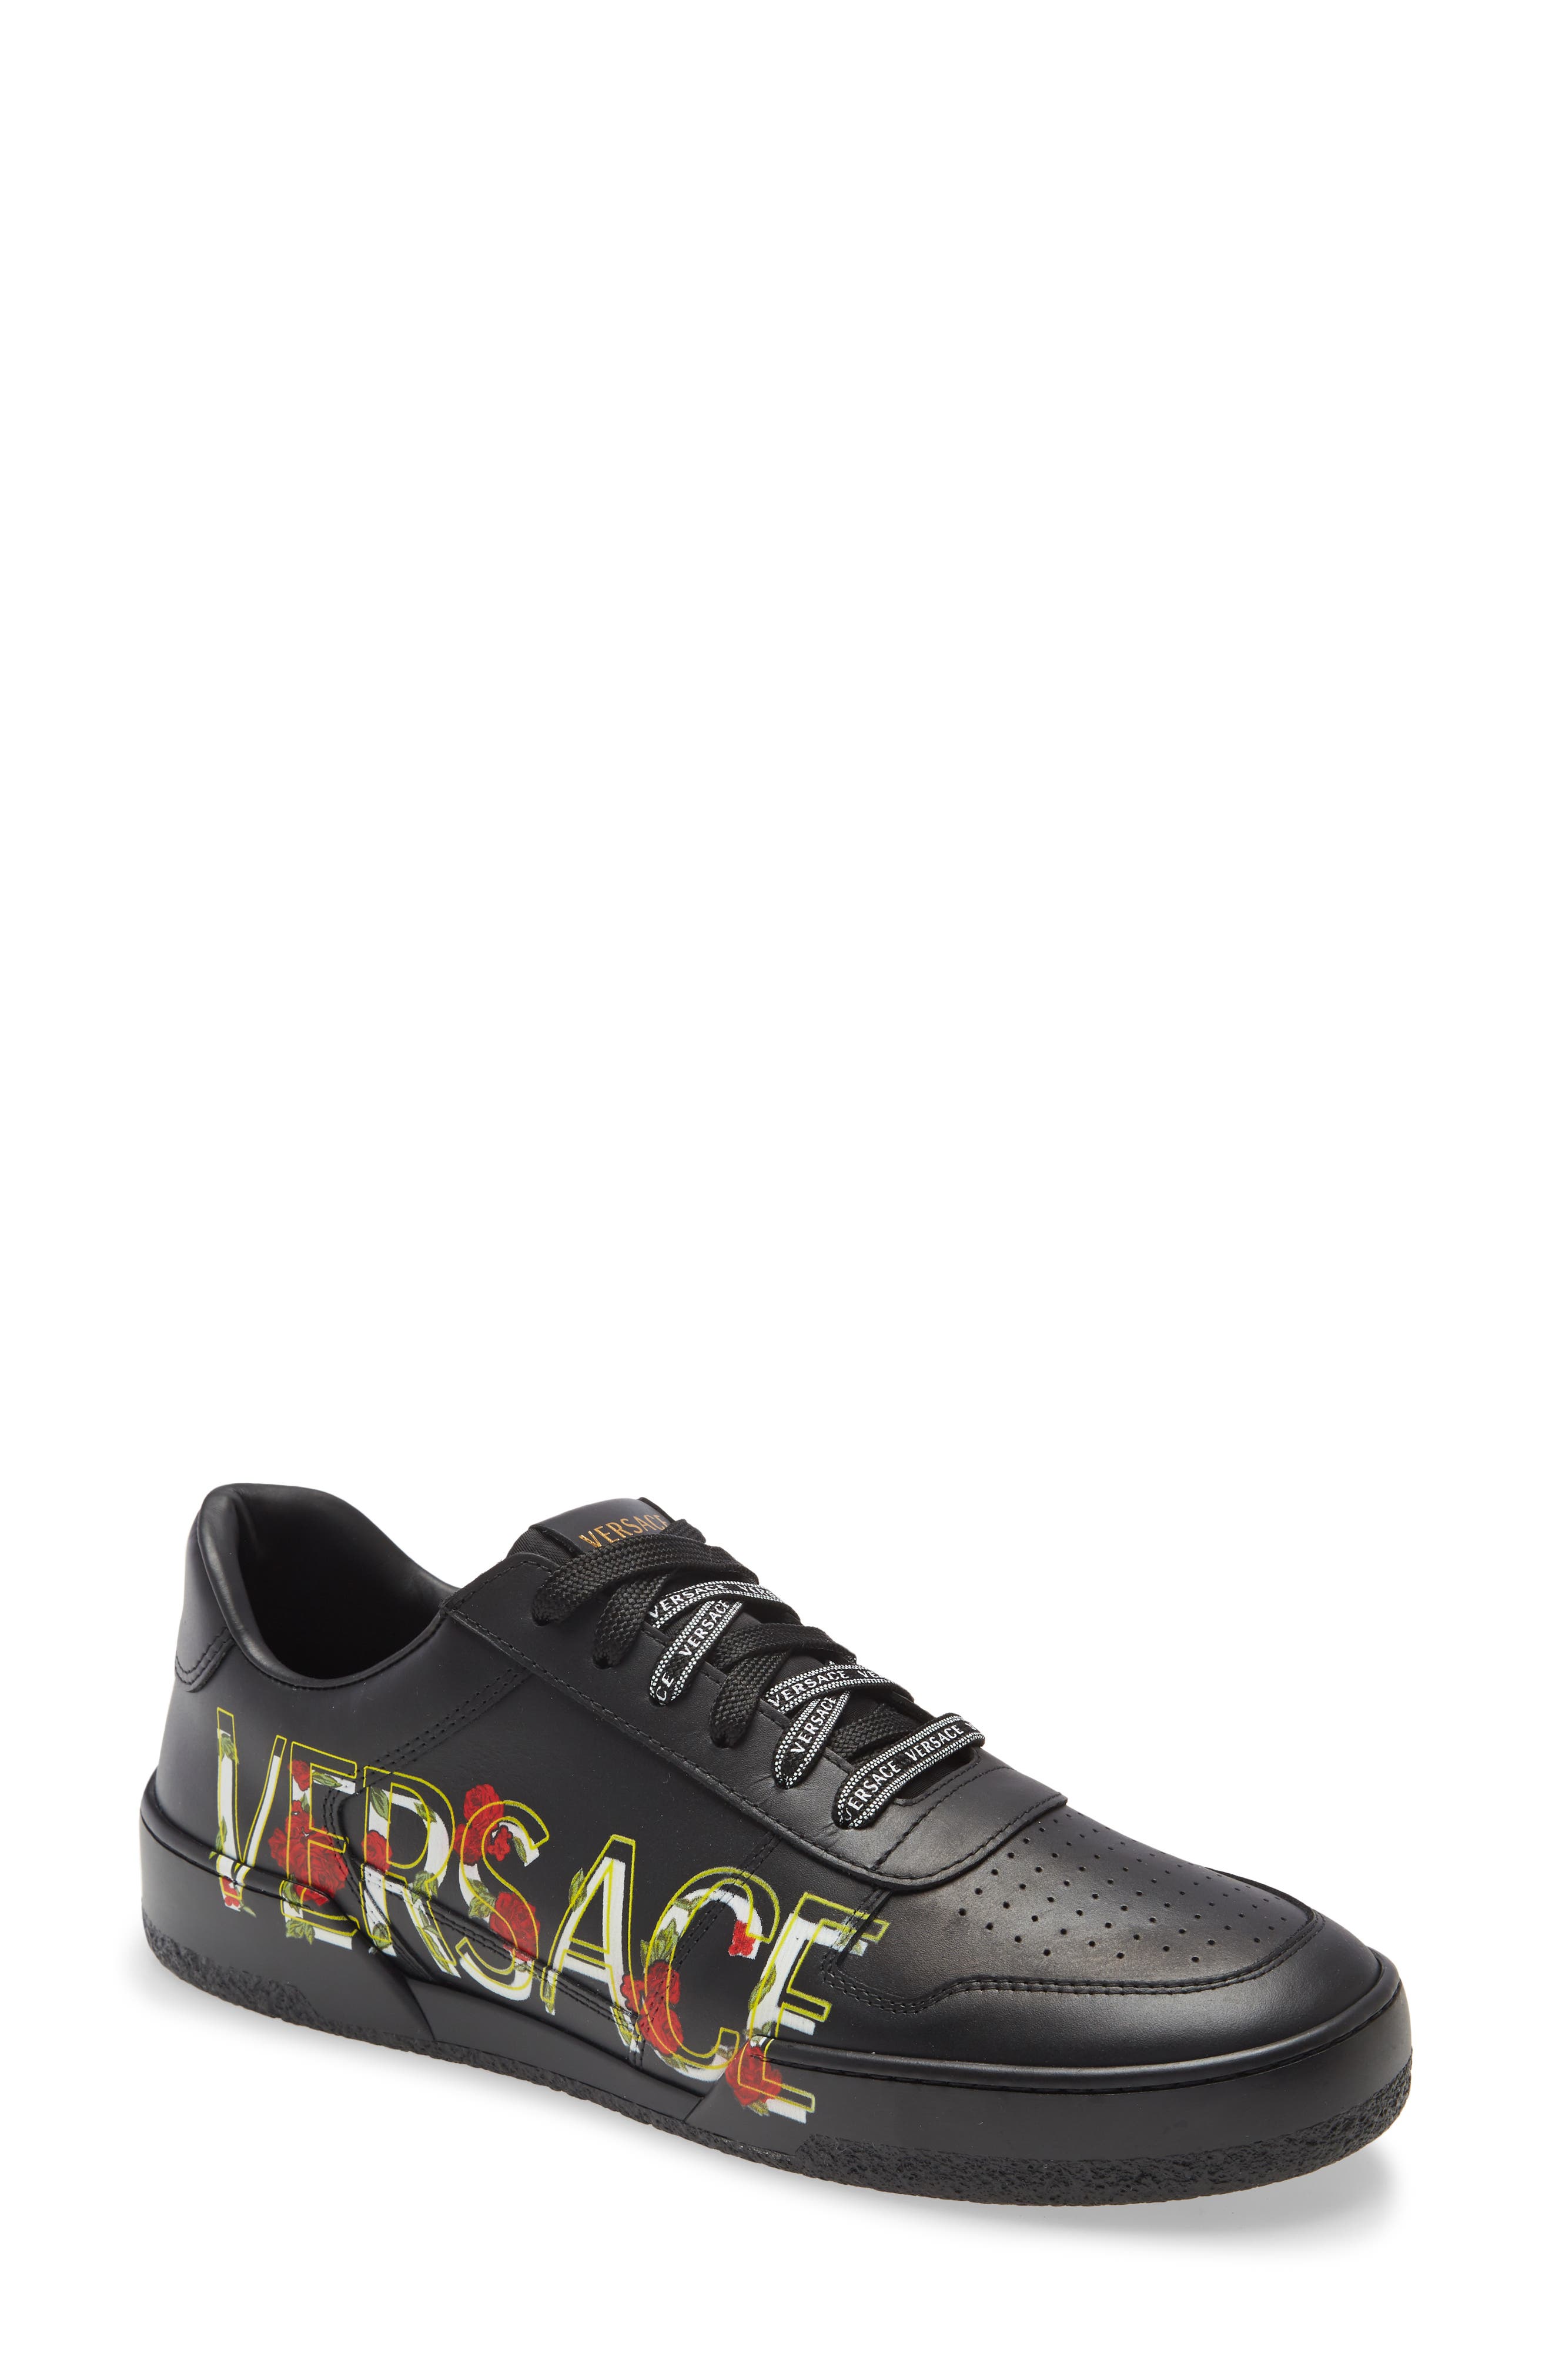 versace shoes nordstrom